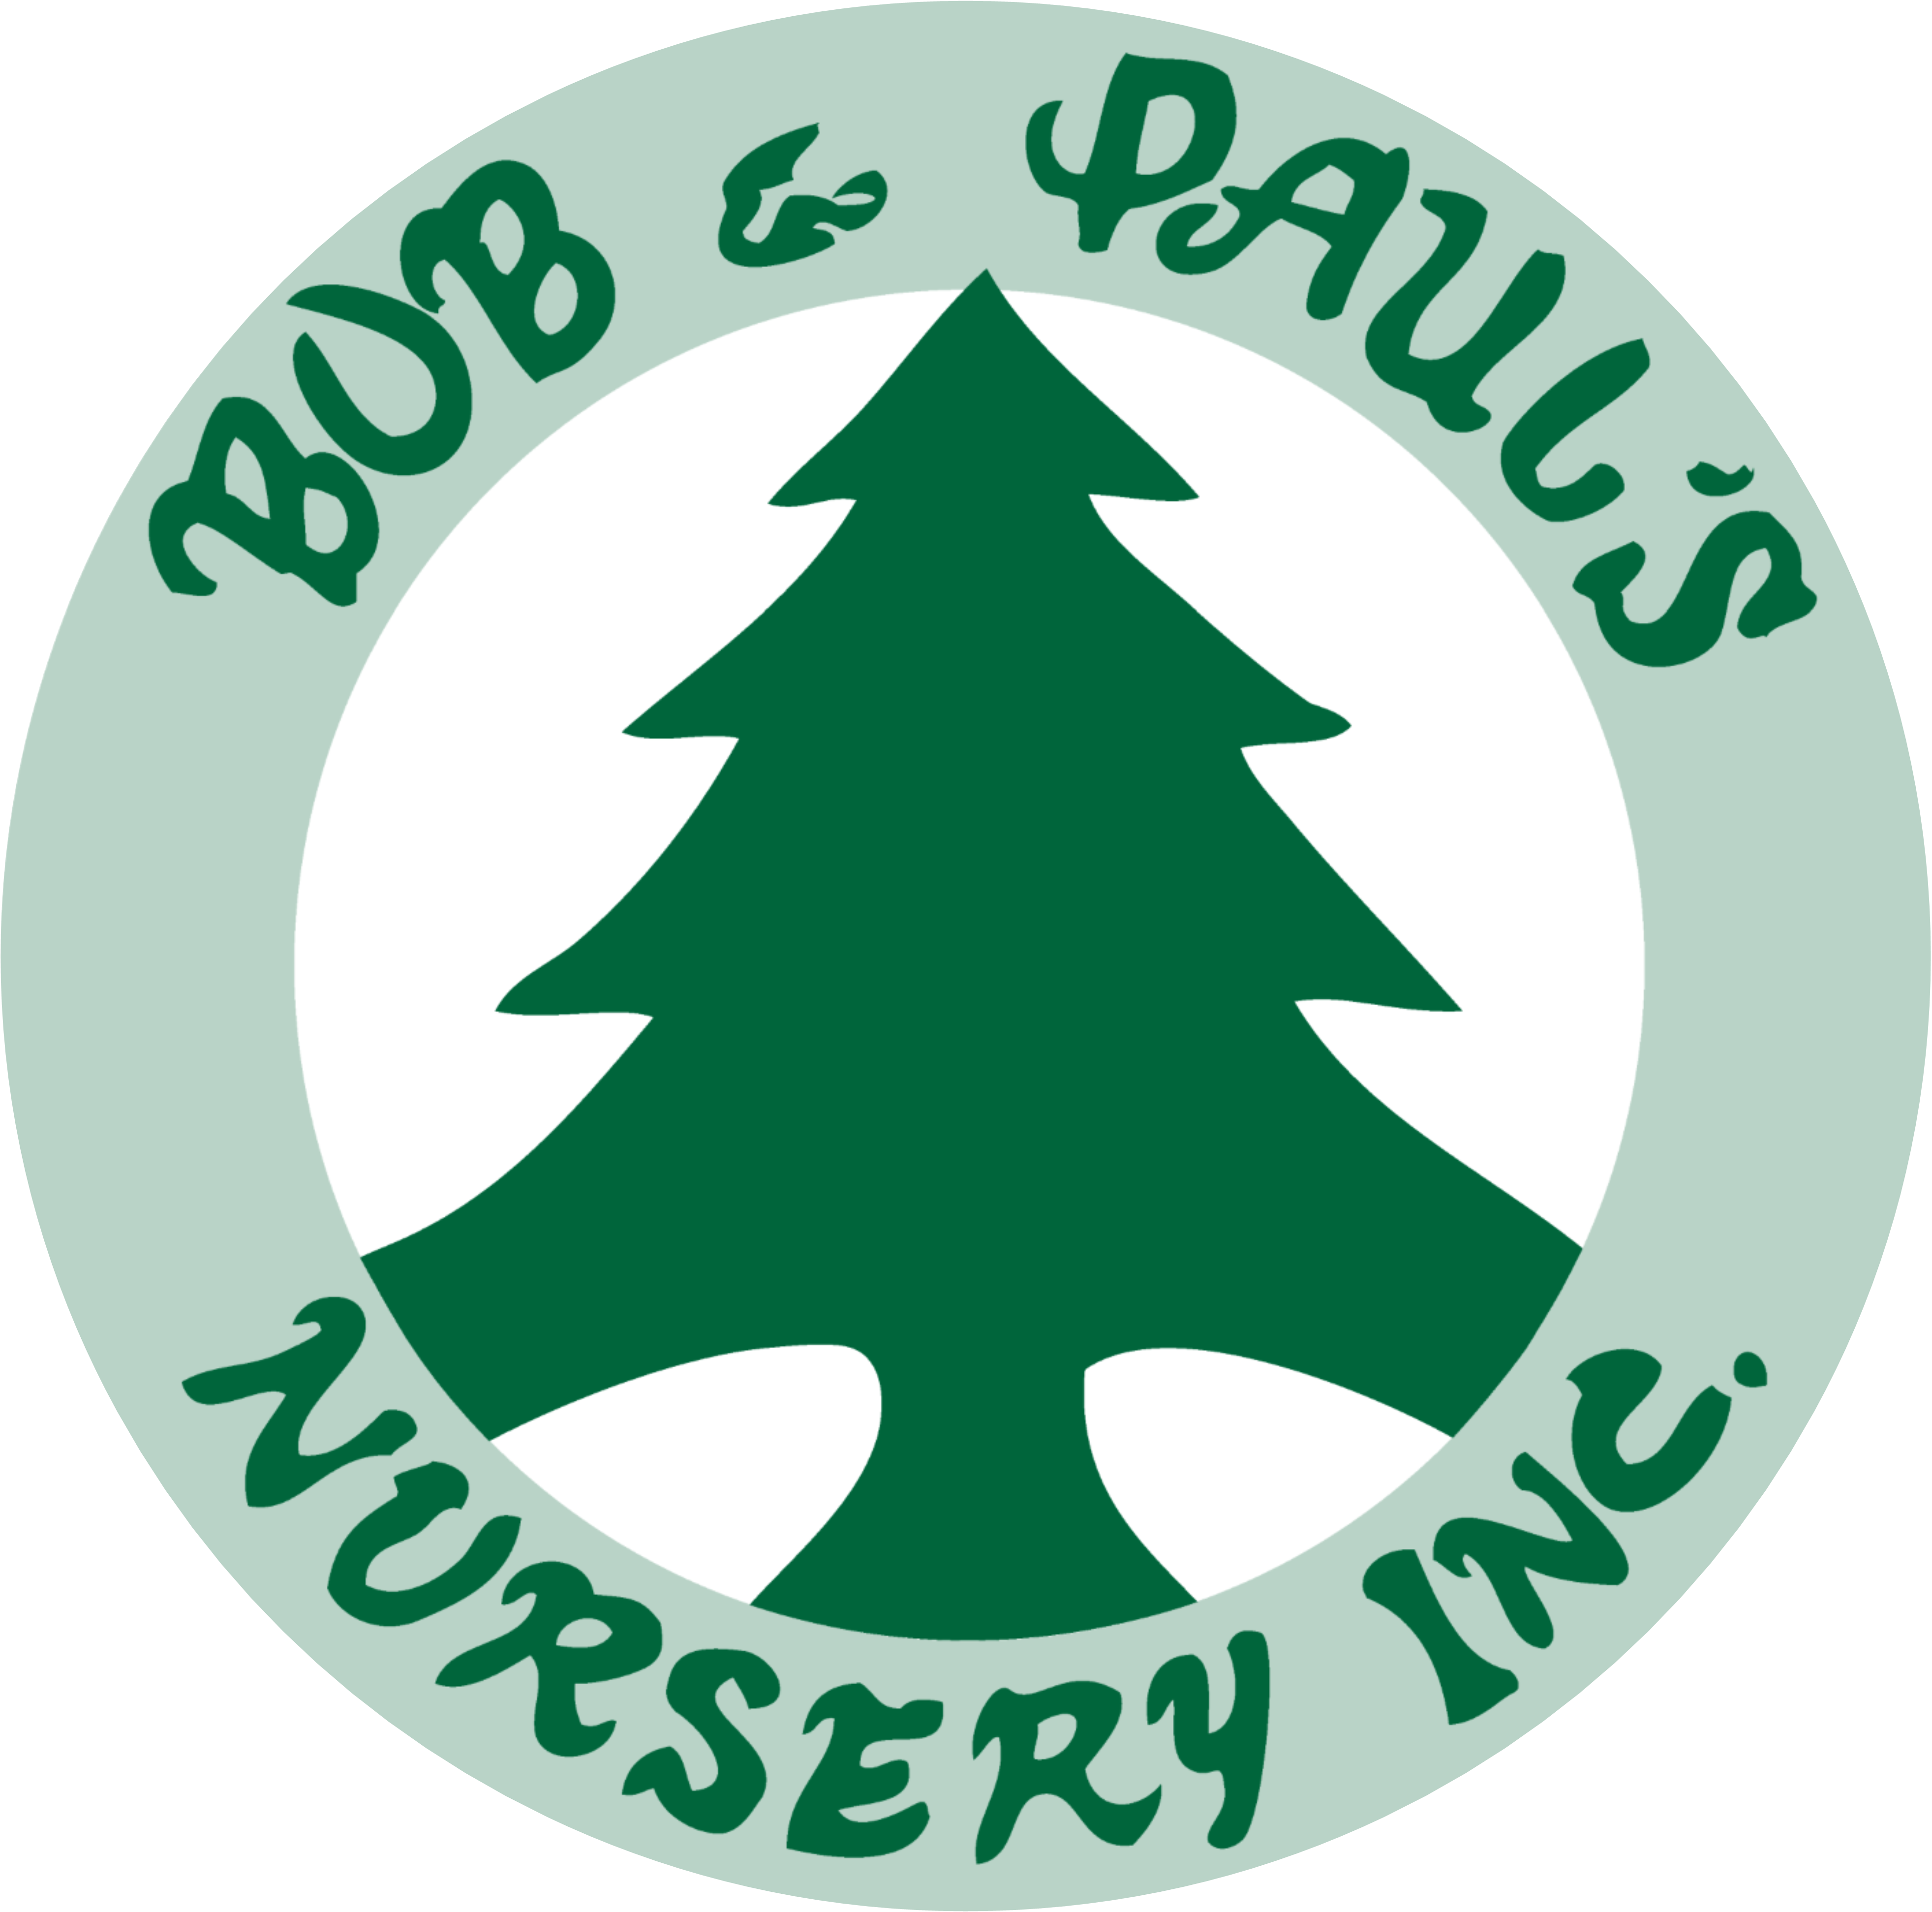 Bob and Paul's Nursery - Beautiful Landscaping since 1978